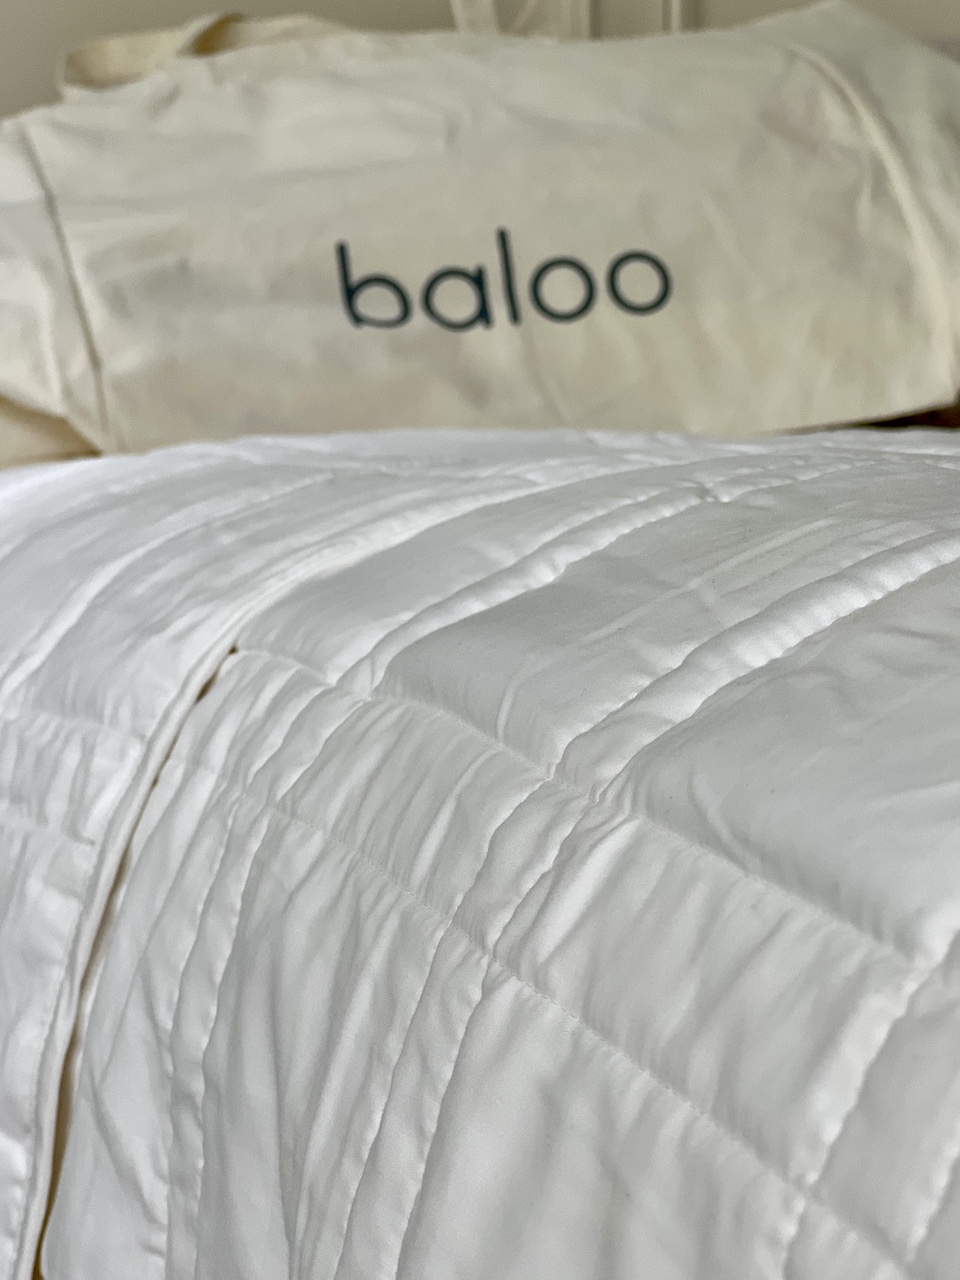 baloo weighted comforter discount code